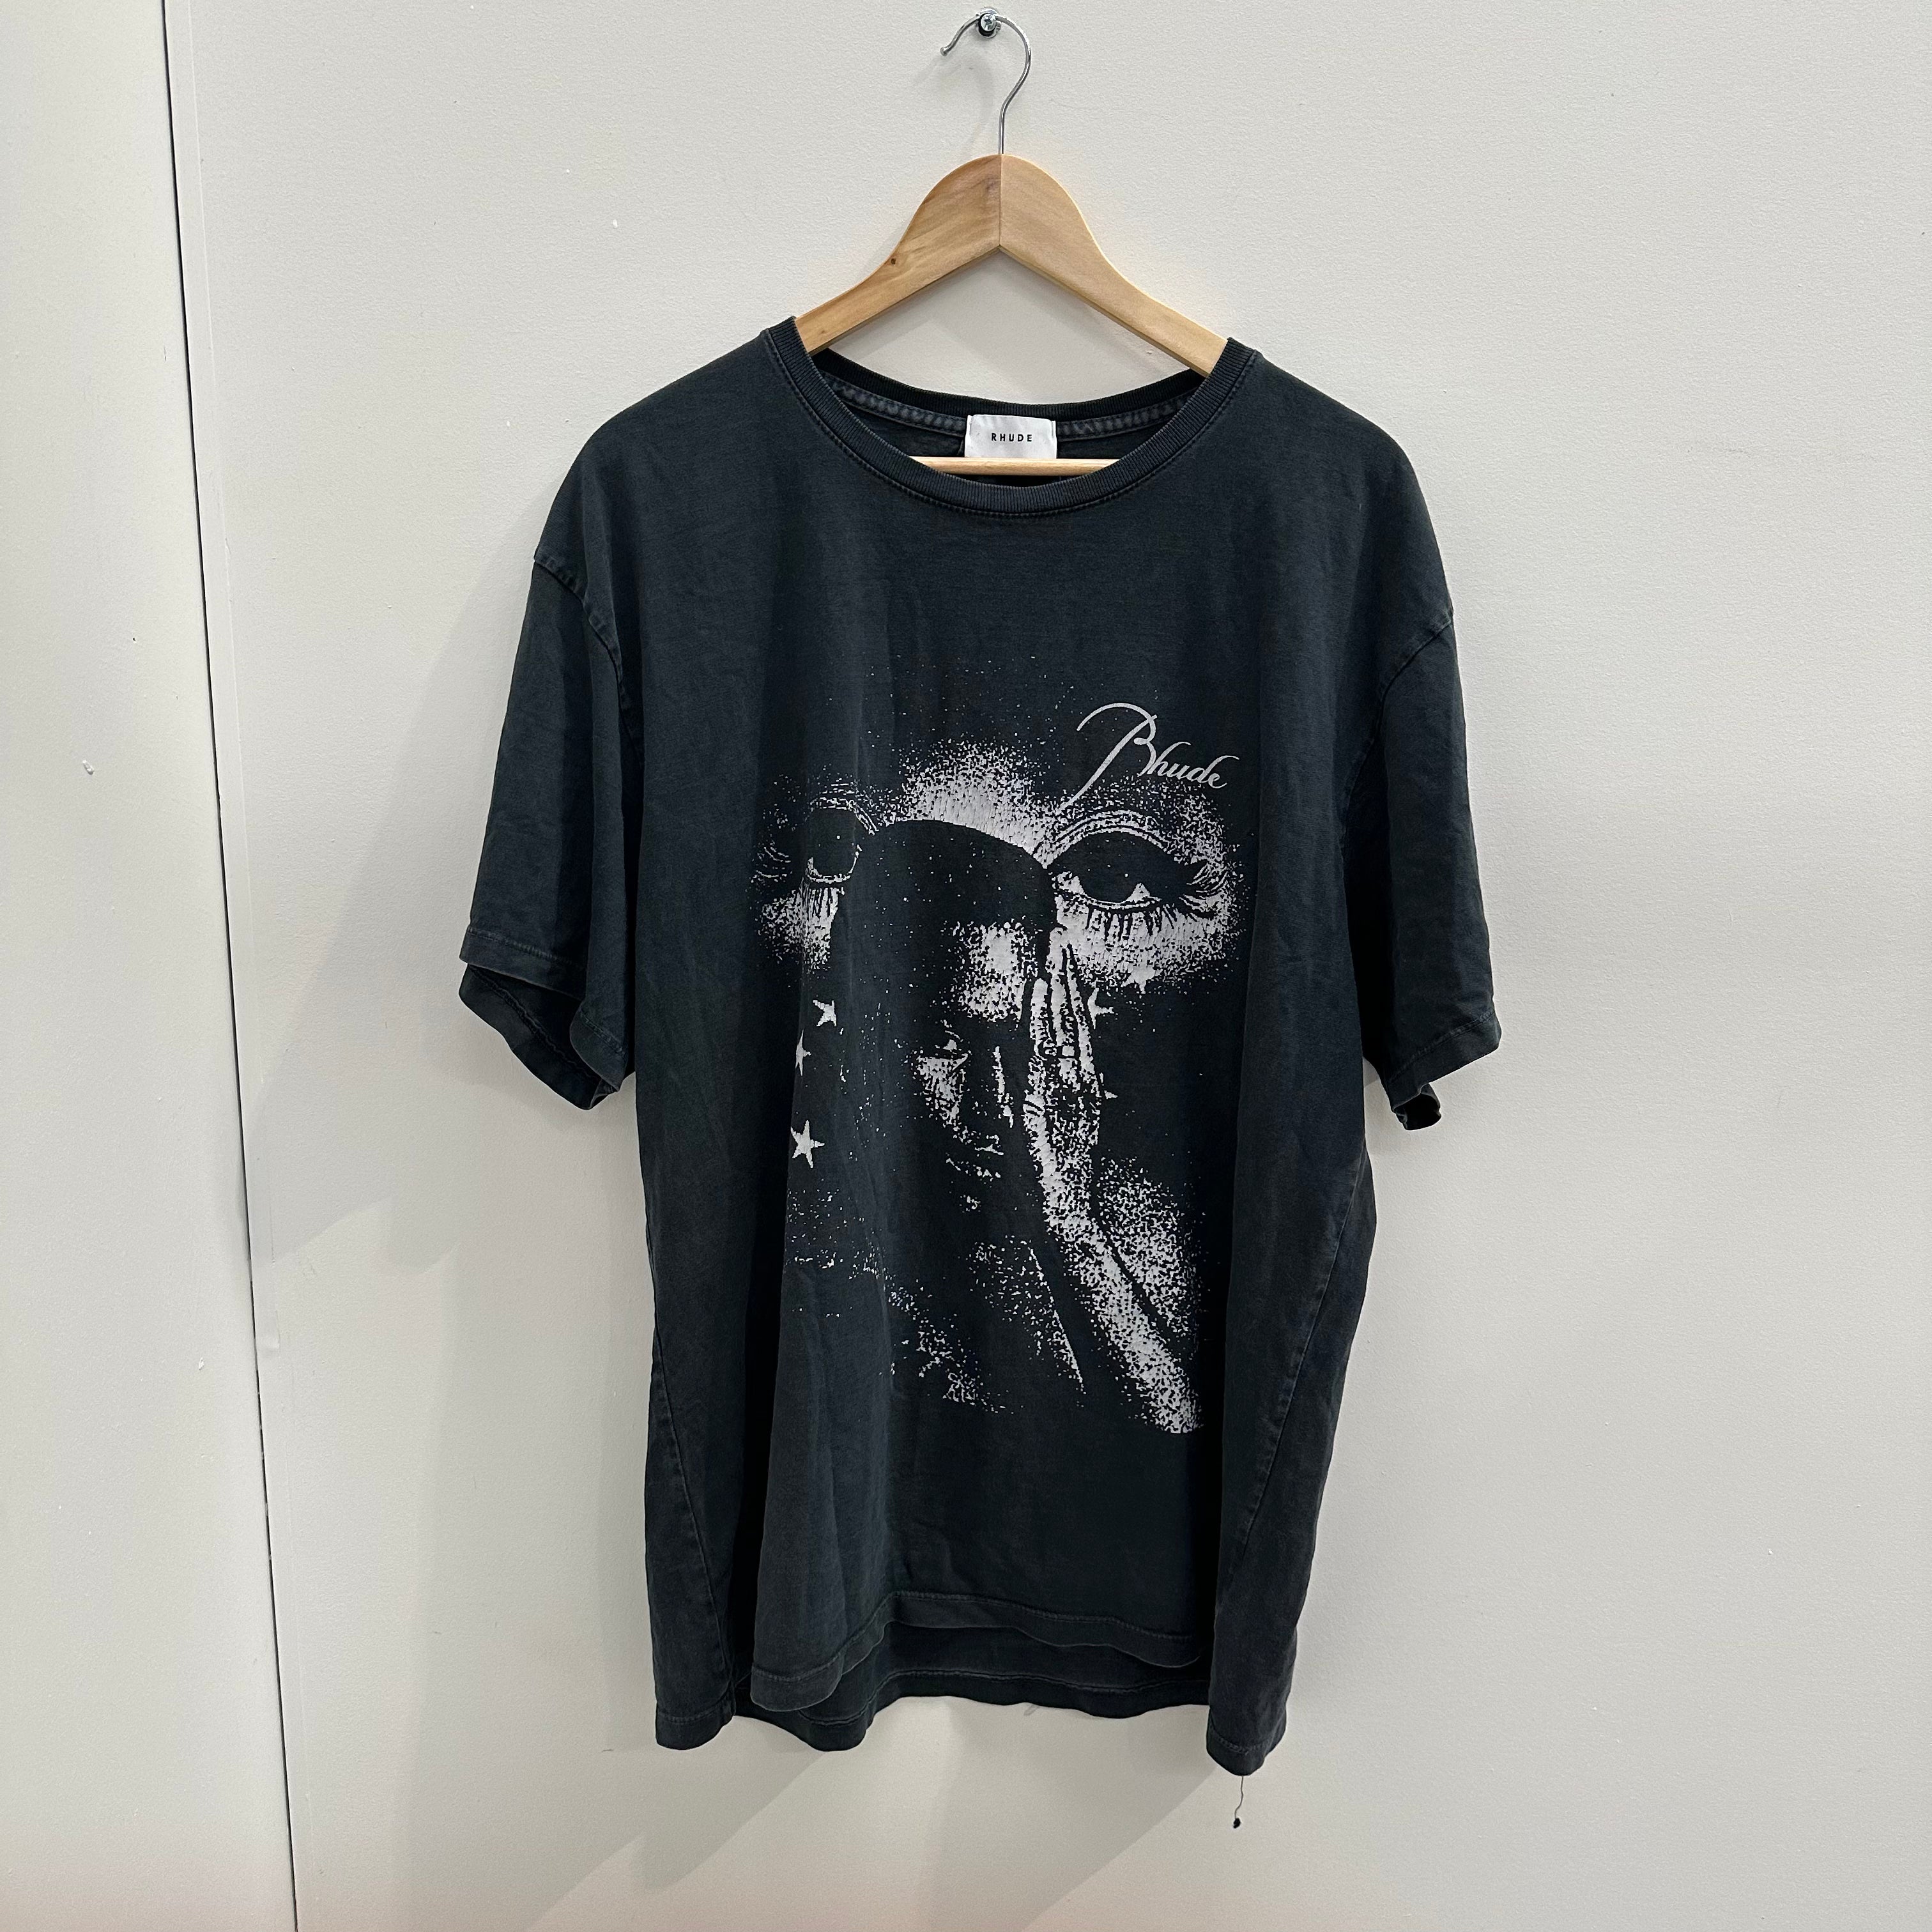 Rhude Black Beauty T-Shirt (fits L-XL)